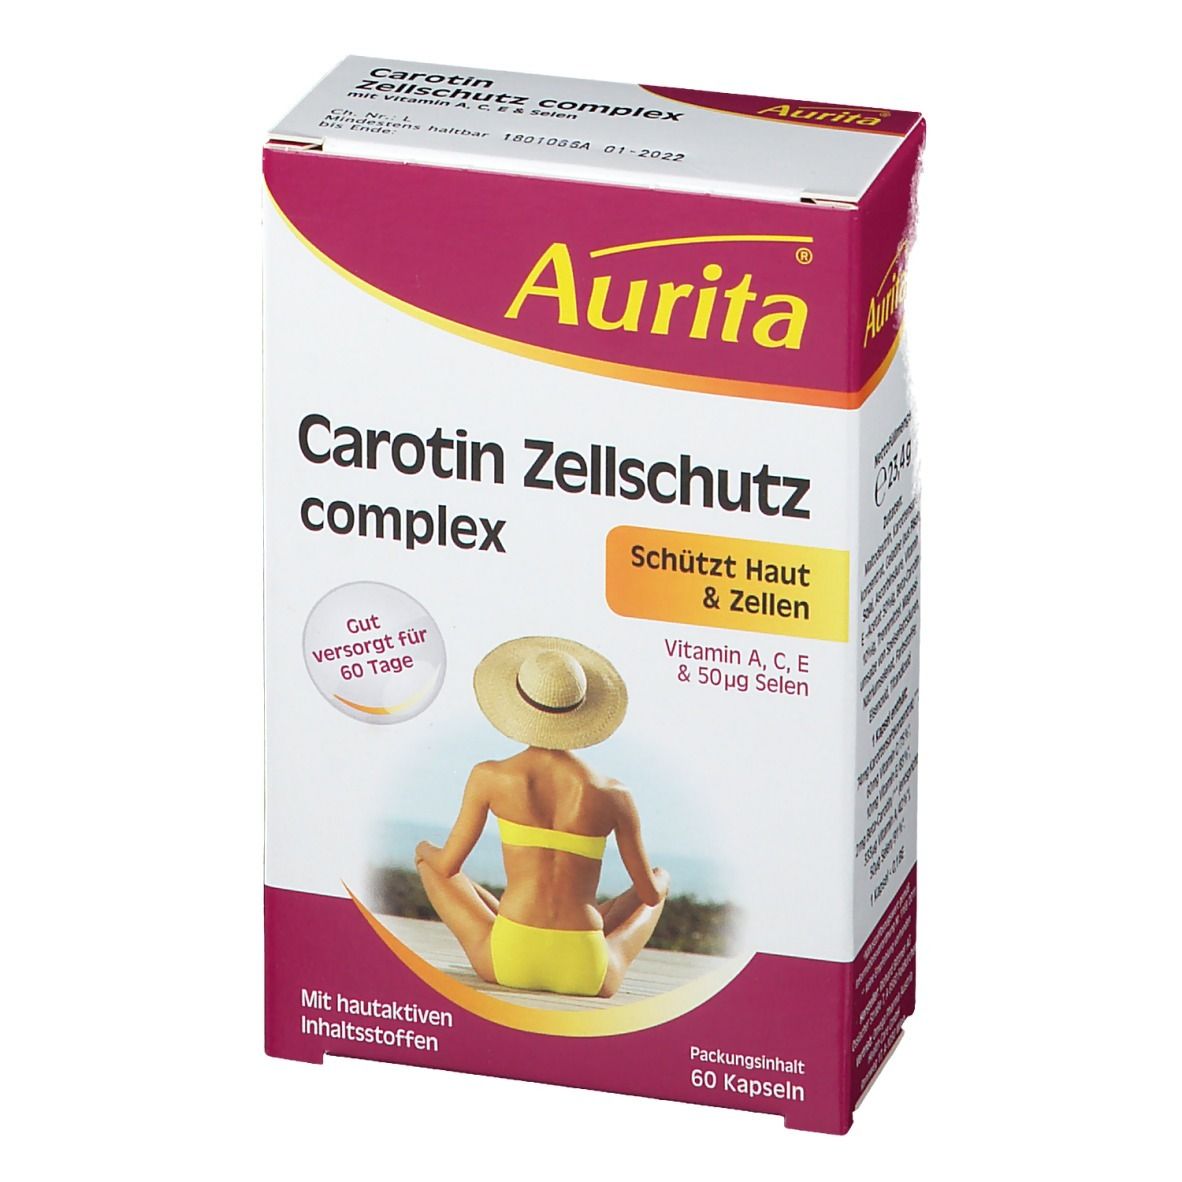 Aurita® Carotin Zellschutz complex